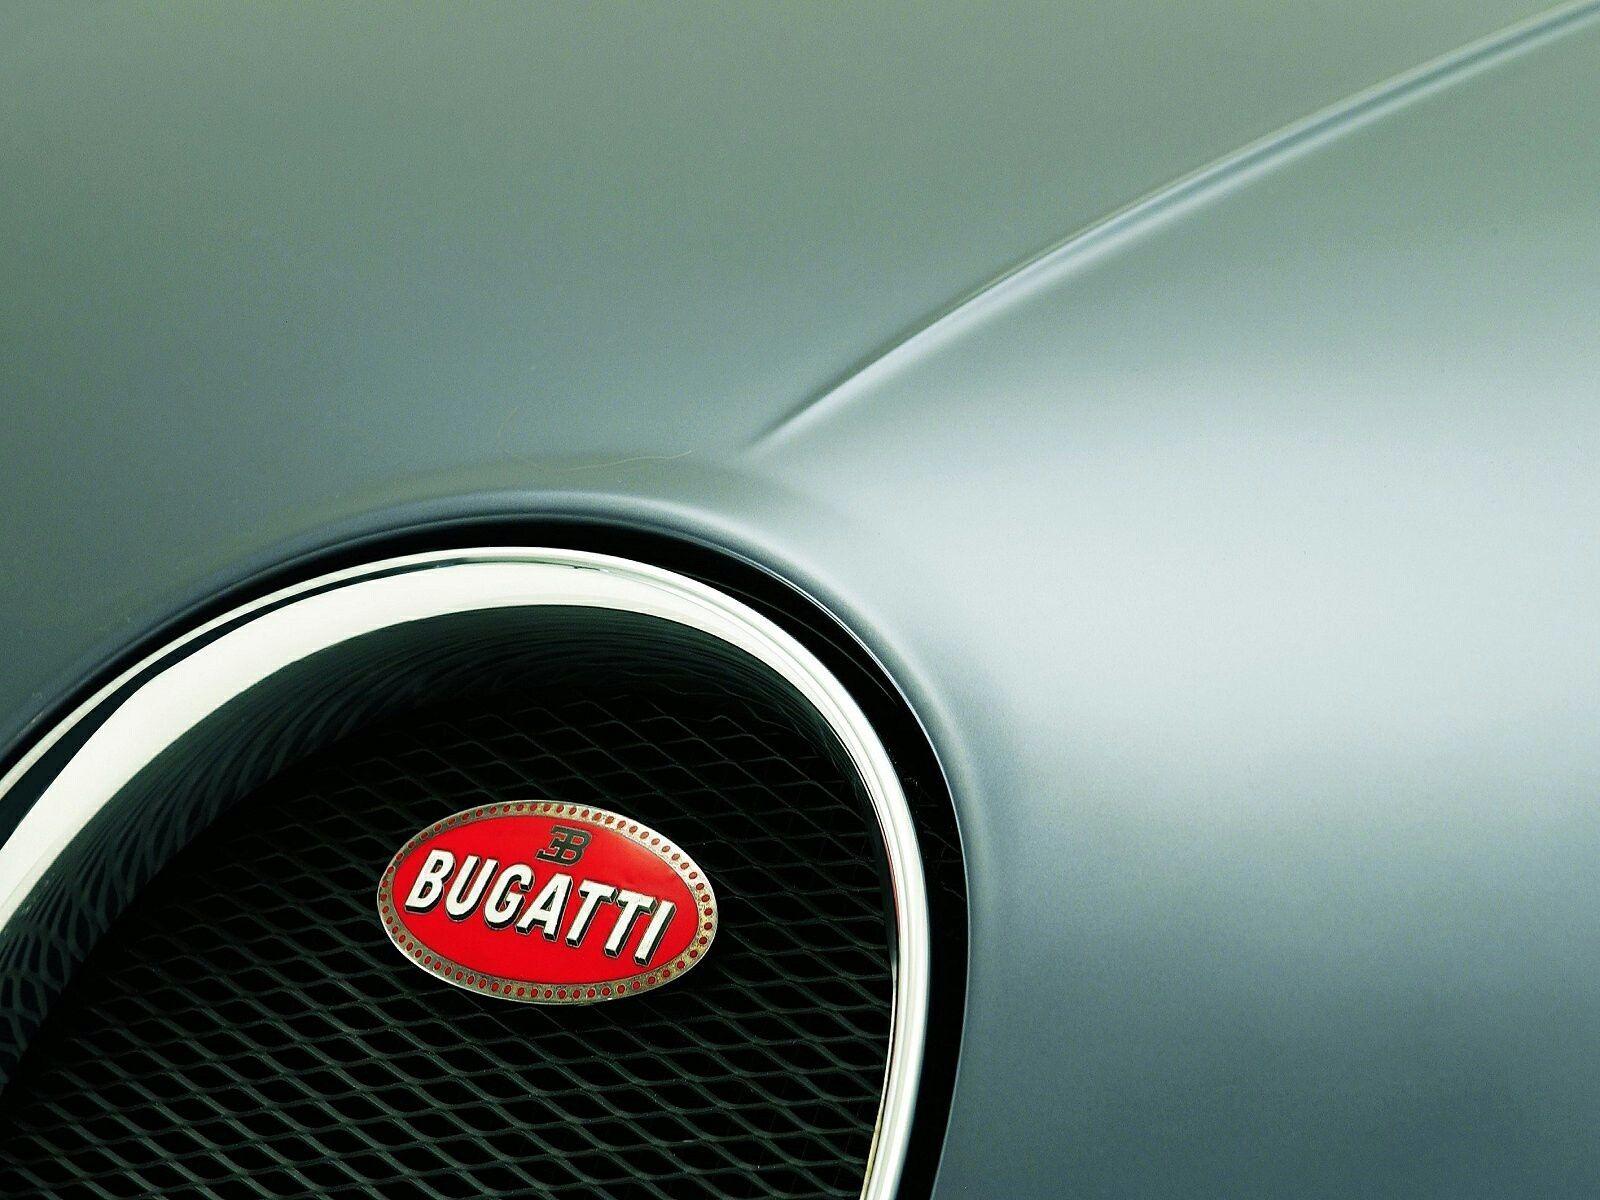 Bugatti Veyron Logo - Bugatti Logo, Bugatti Car Symbol Meaning and History | Car Brand ...